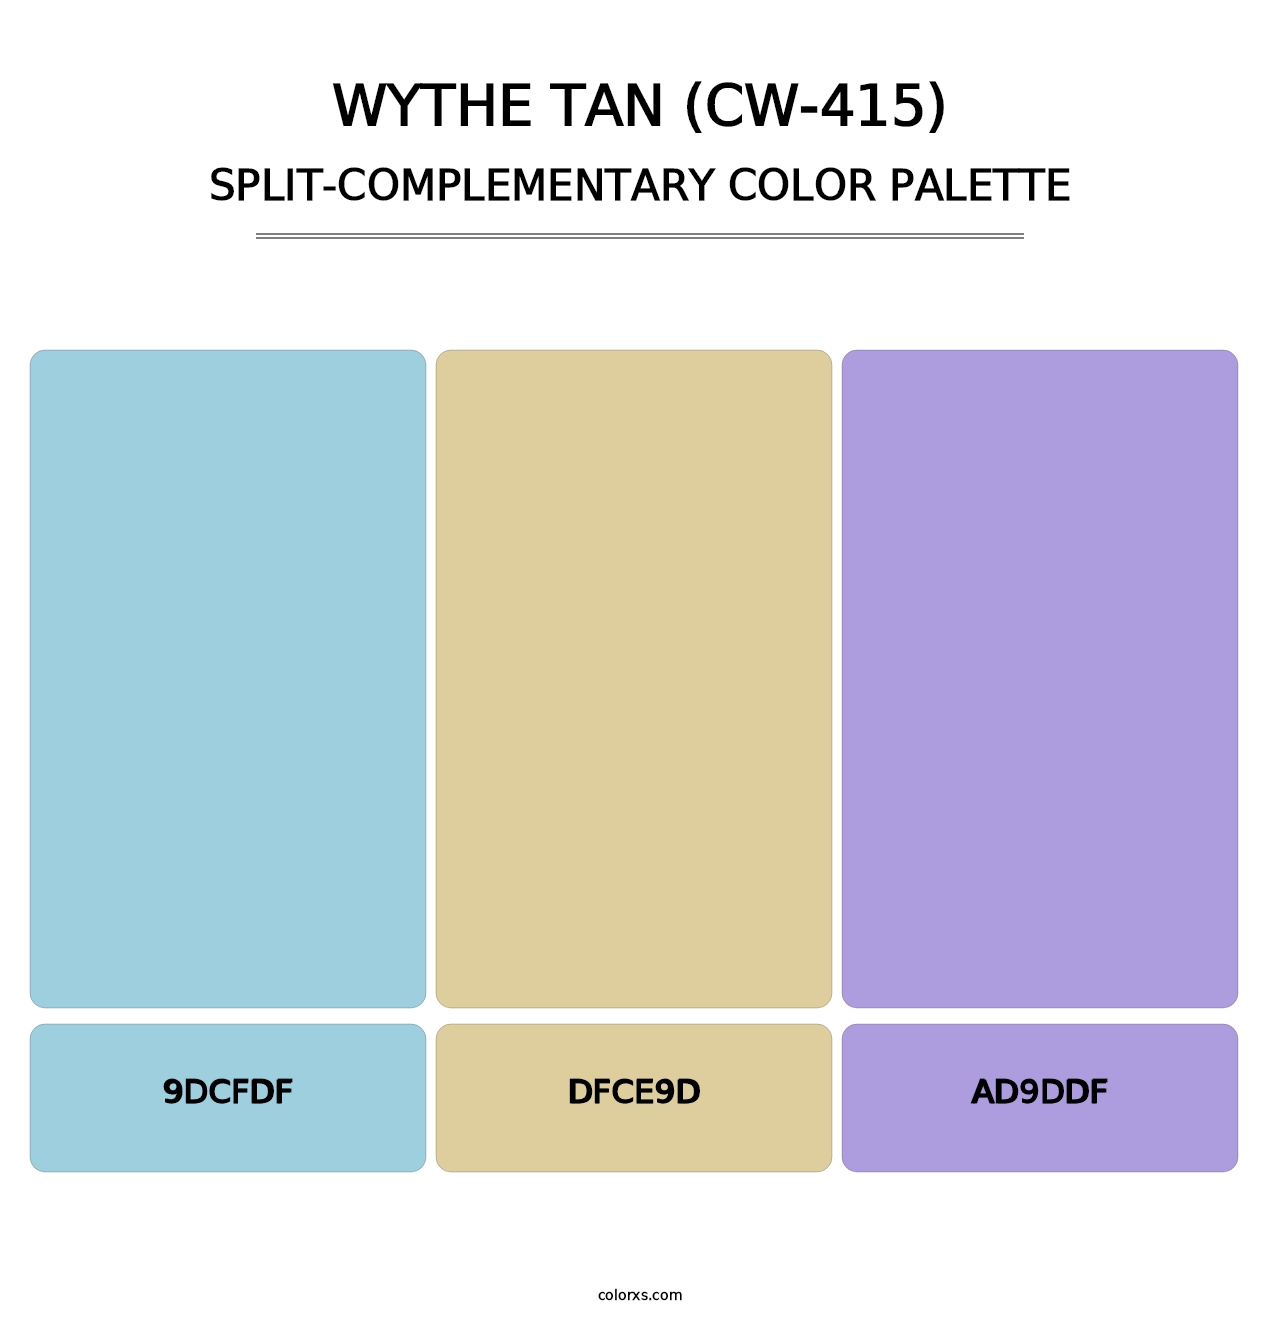 Wythe Tan (CW-415) - Split-Complementary Color Palette